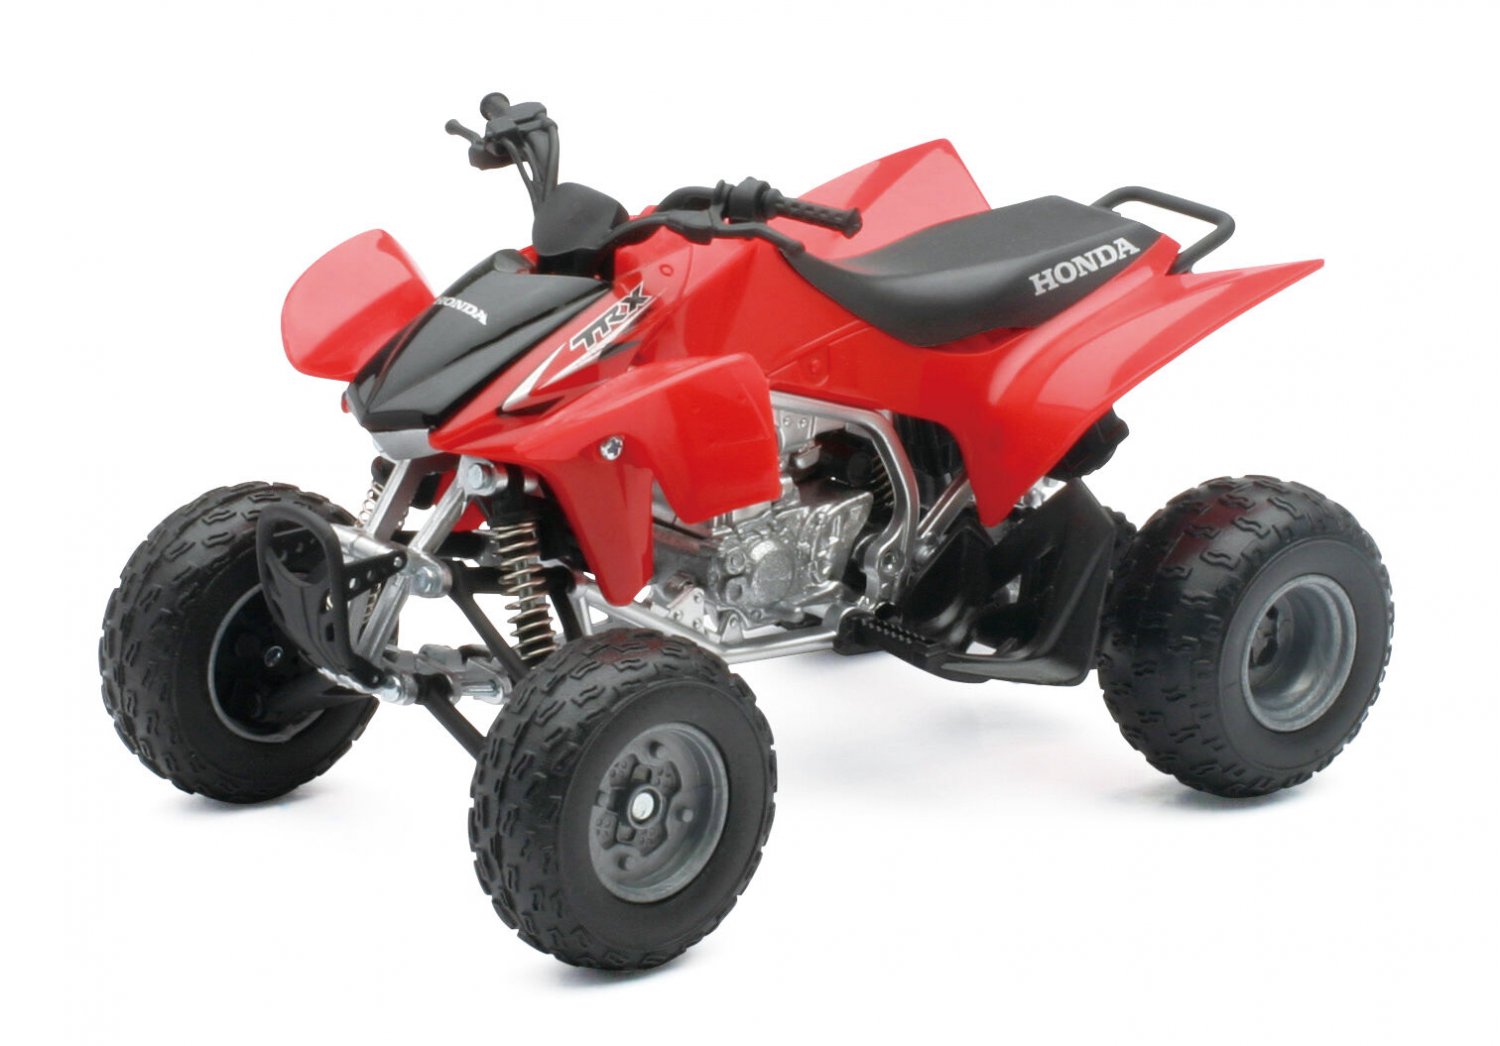 2009 HONDA TRX 450R ATV RED 1/12 DIECAST MOTORCYCLE MODEL